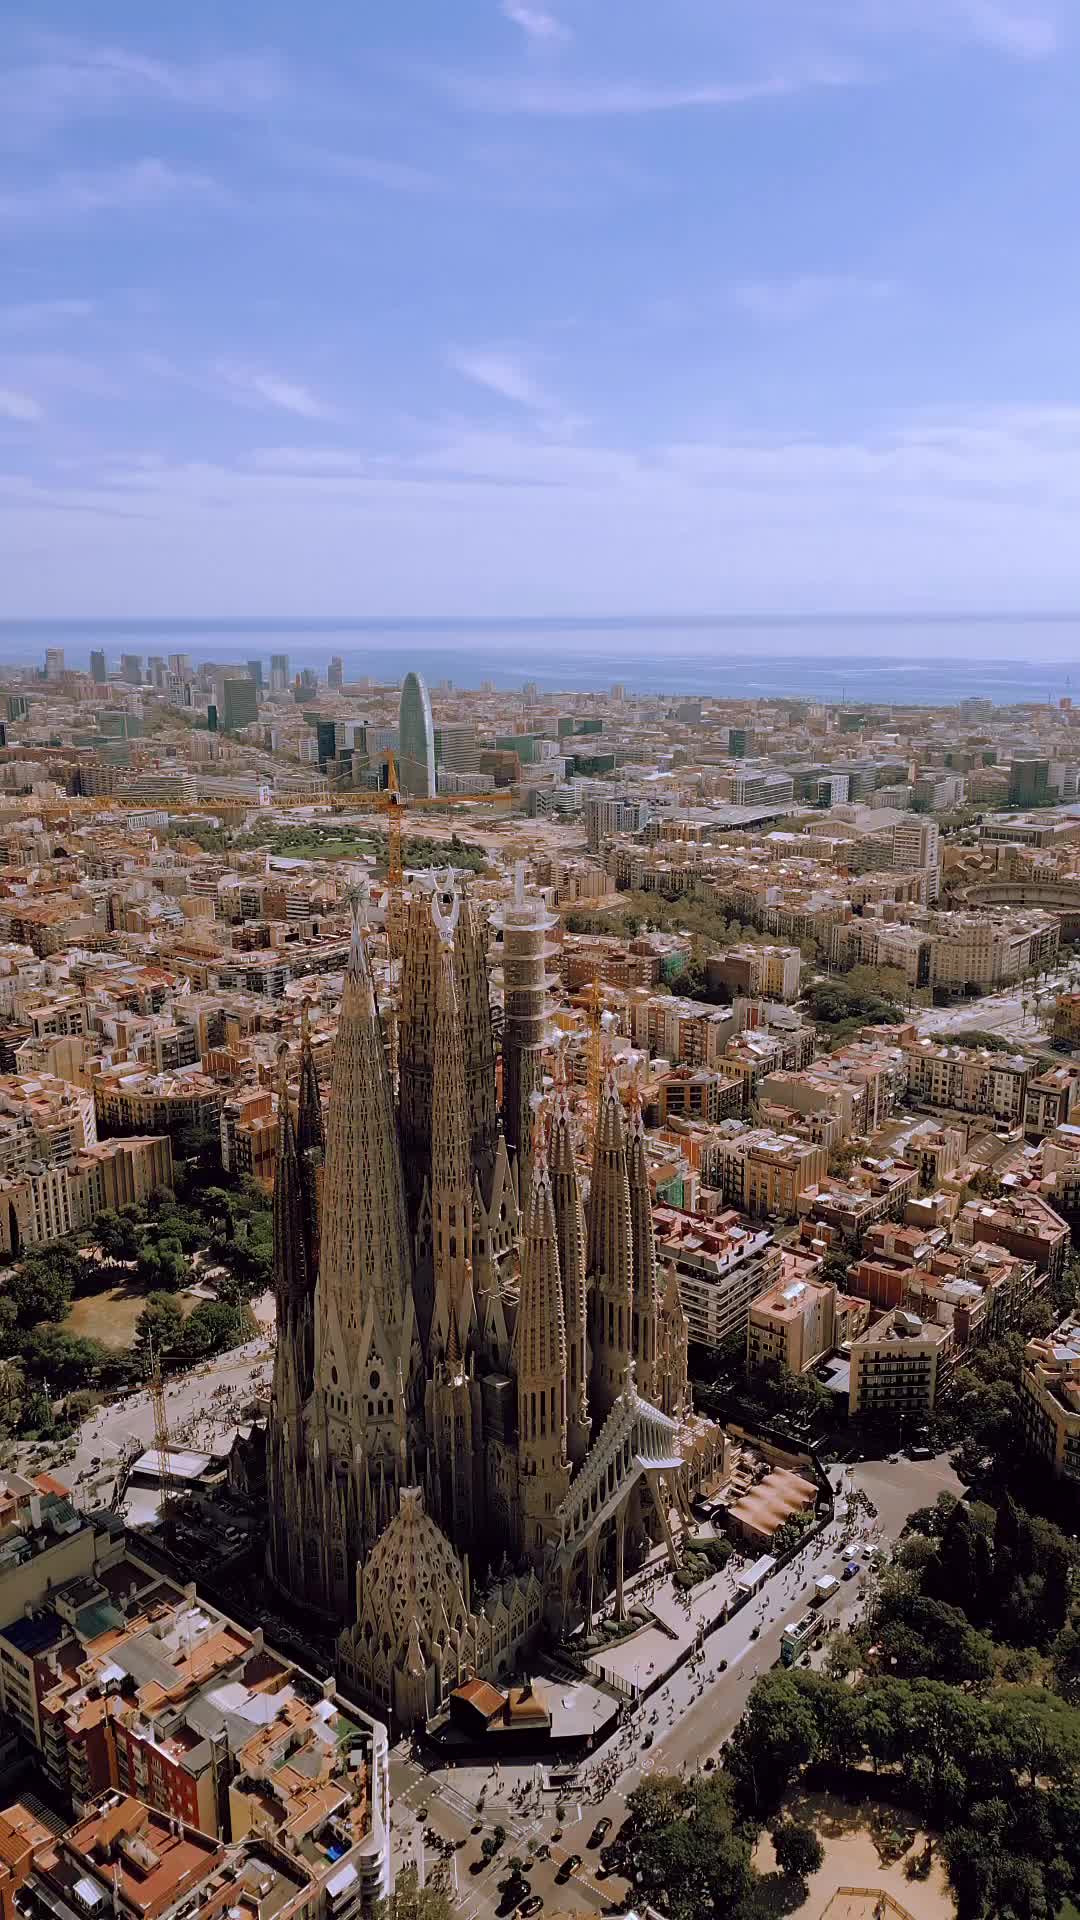 Explore Sagrada Familia in Barcelona - Gaudi's Masterpiece